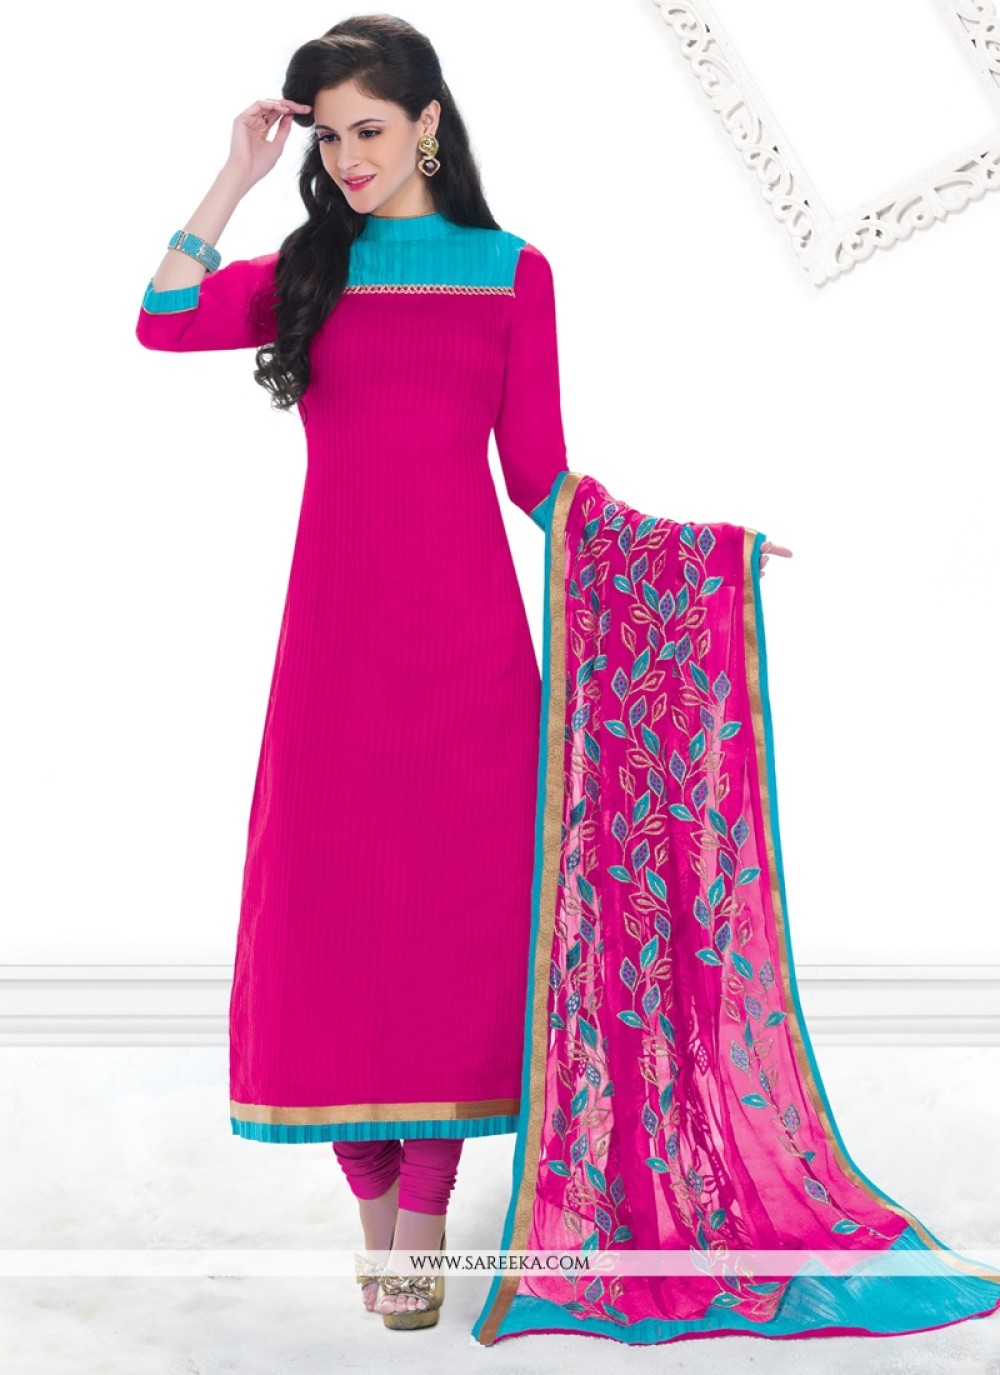 Chanderi Hot Pink Lace Work Churidar Designer Suit